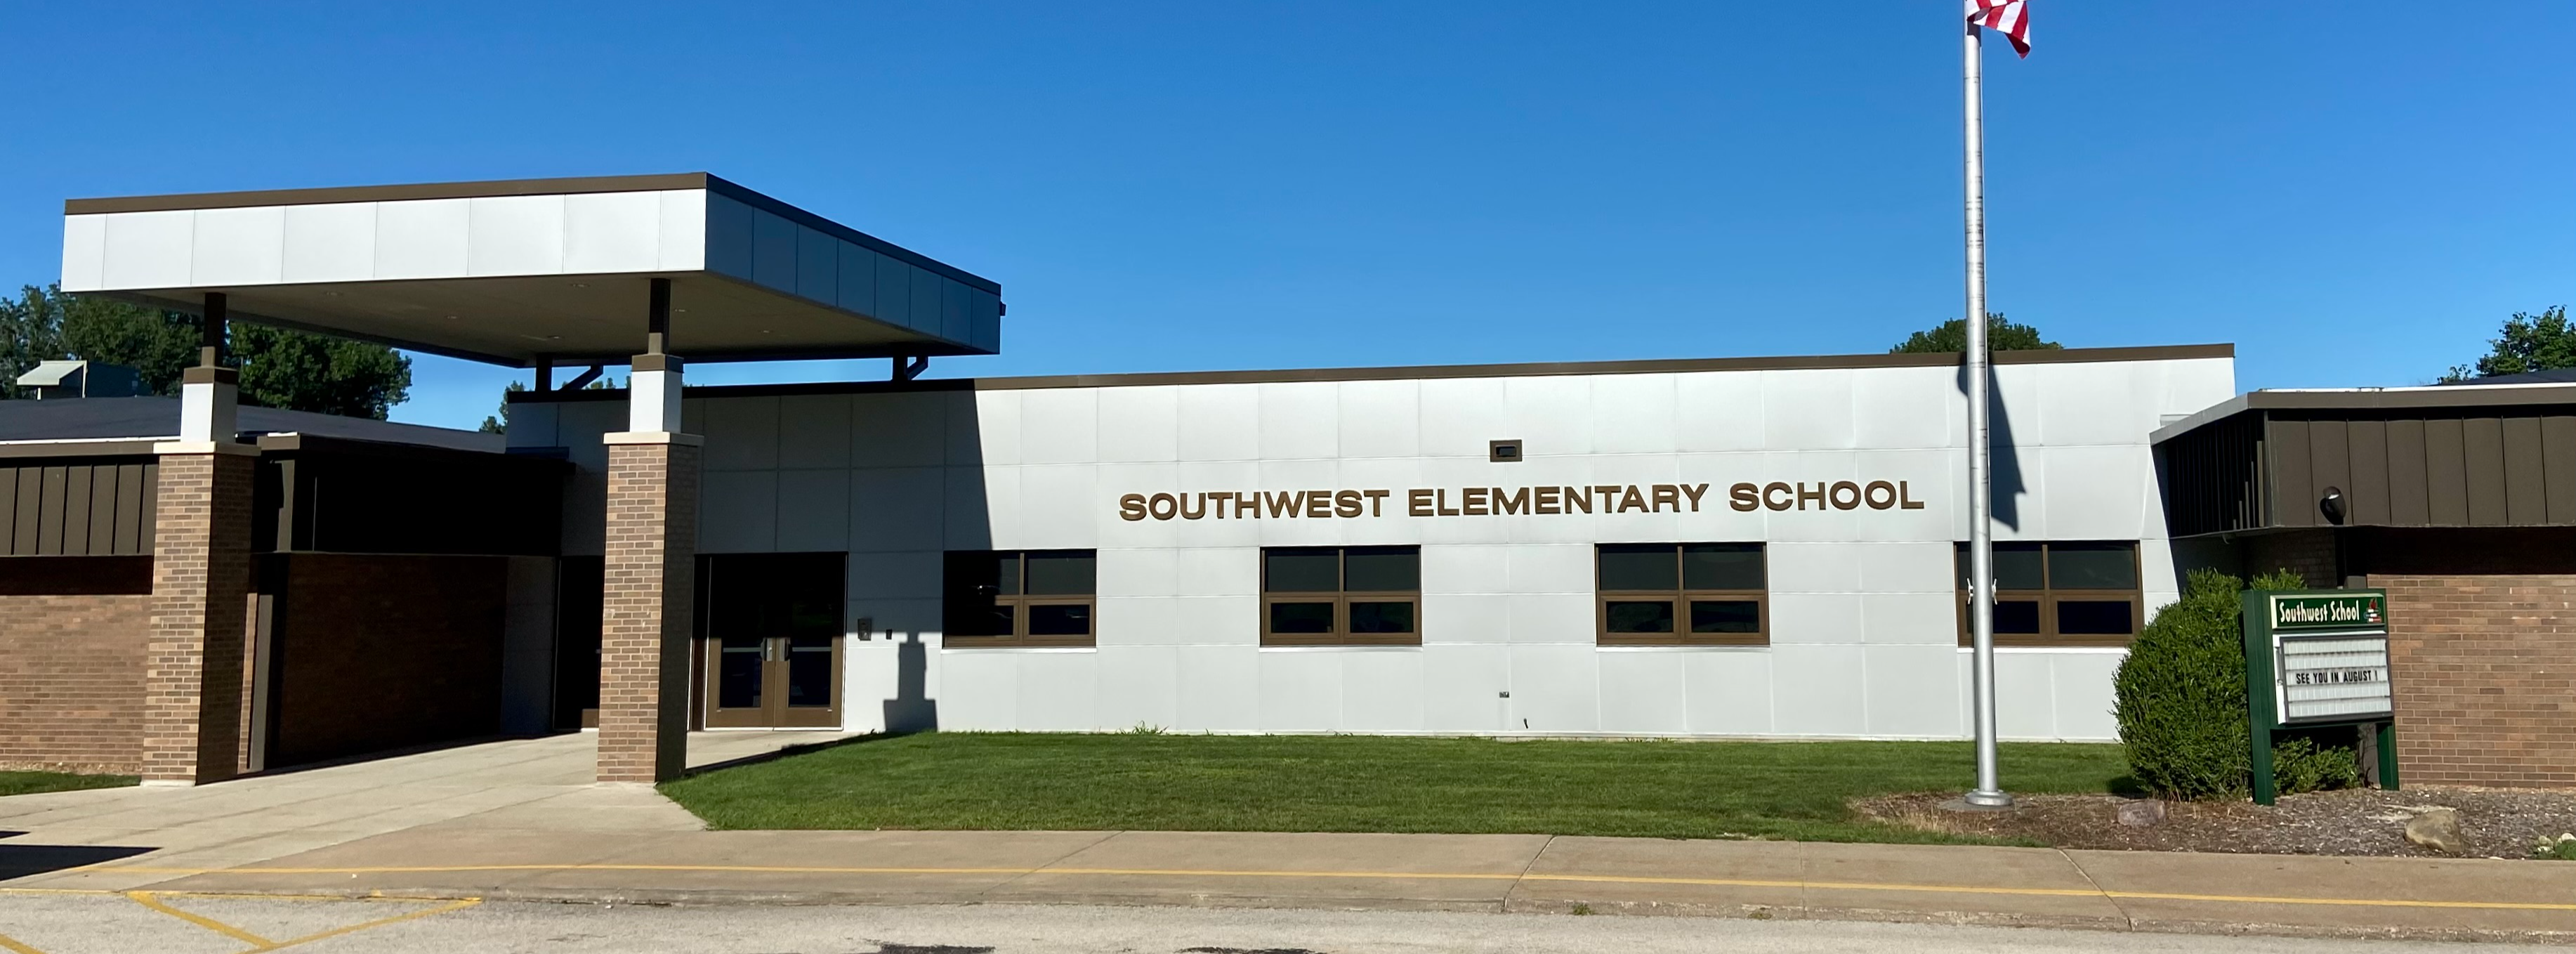 Southwest Elementary School